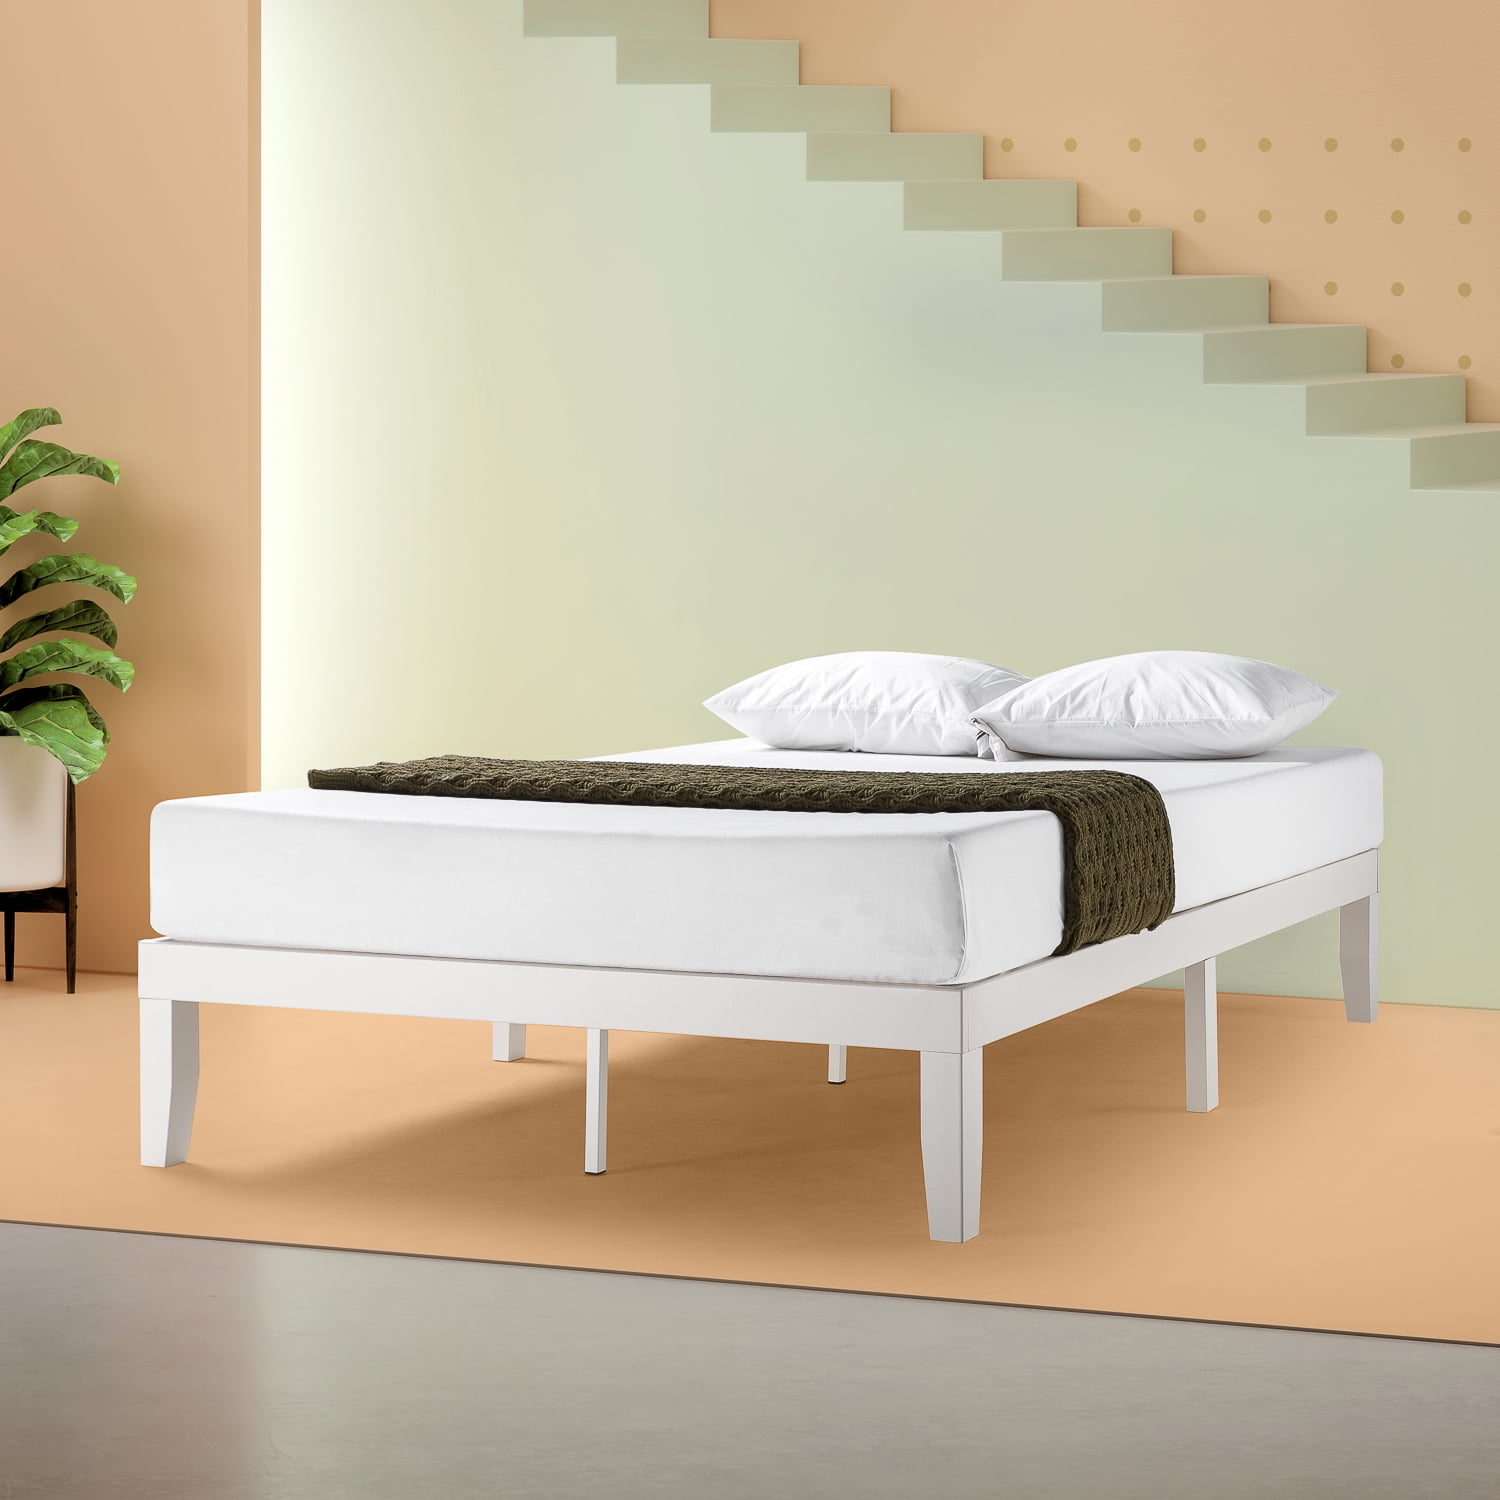 Zinus Moiz 14 Wood Platform Bed Full, Priage By Zinus Antique Espresso Solid Wood Platform Bed With Headboard